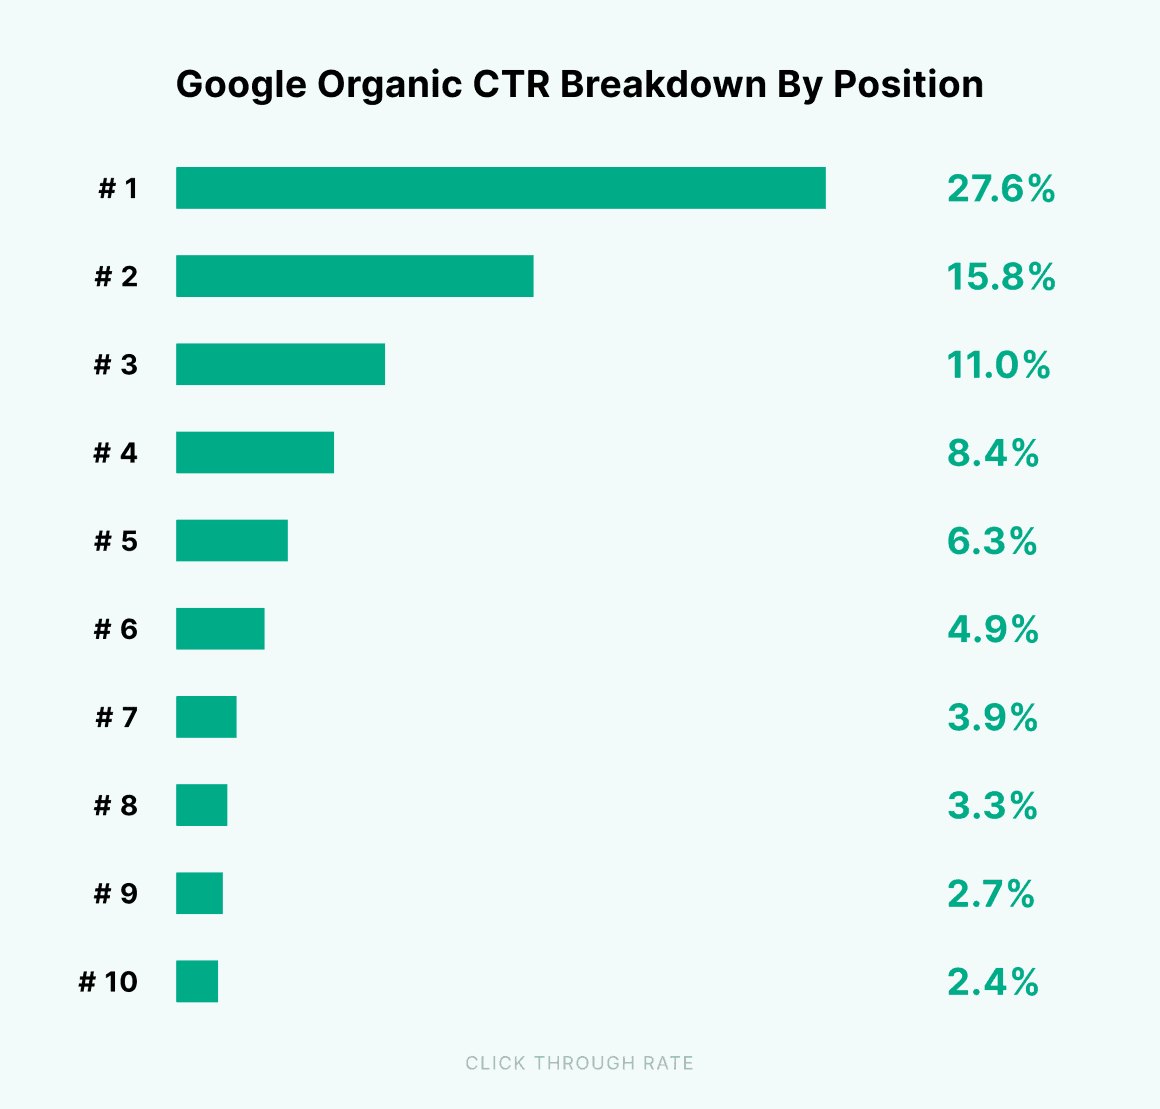 Google organic CTR breakdown by position